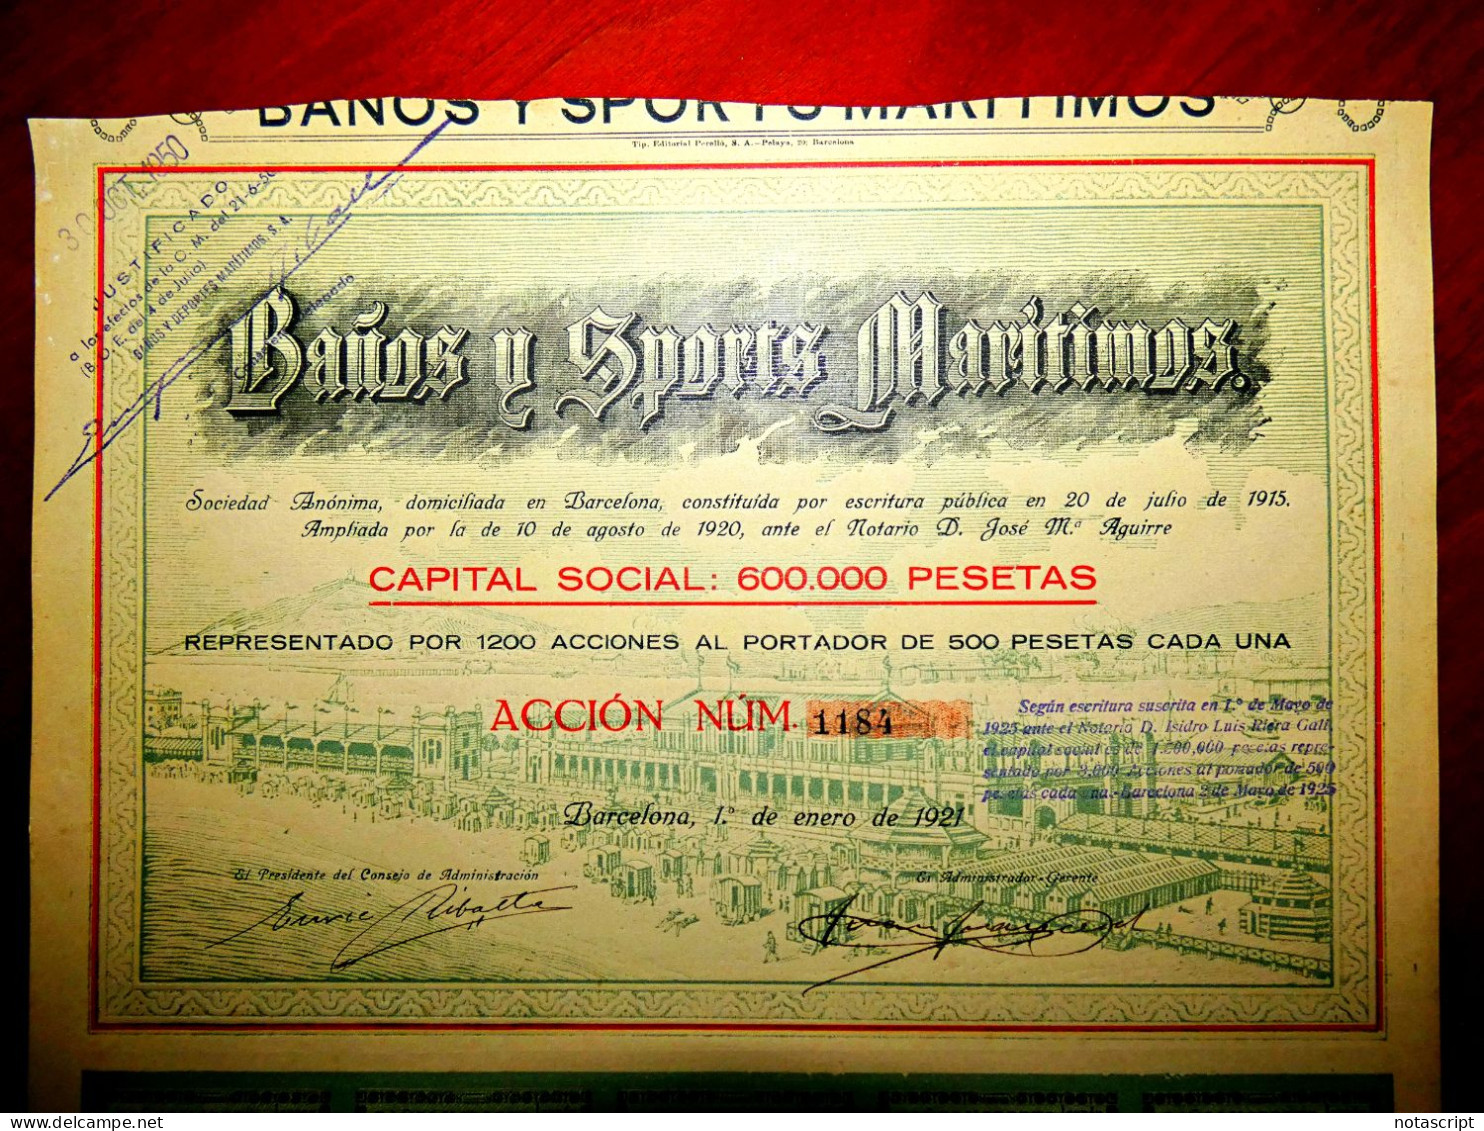 Baños Y Sports Marítimos" ,Barcelona Spain  1921   Share Certificate - Sport